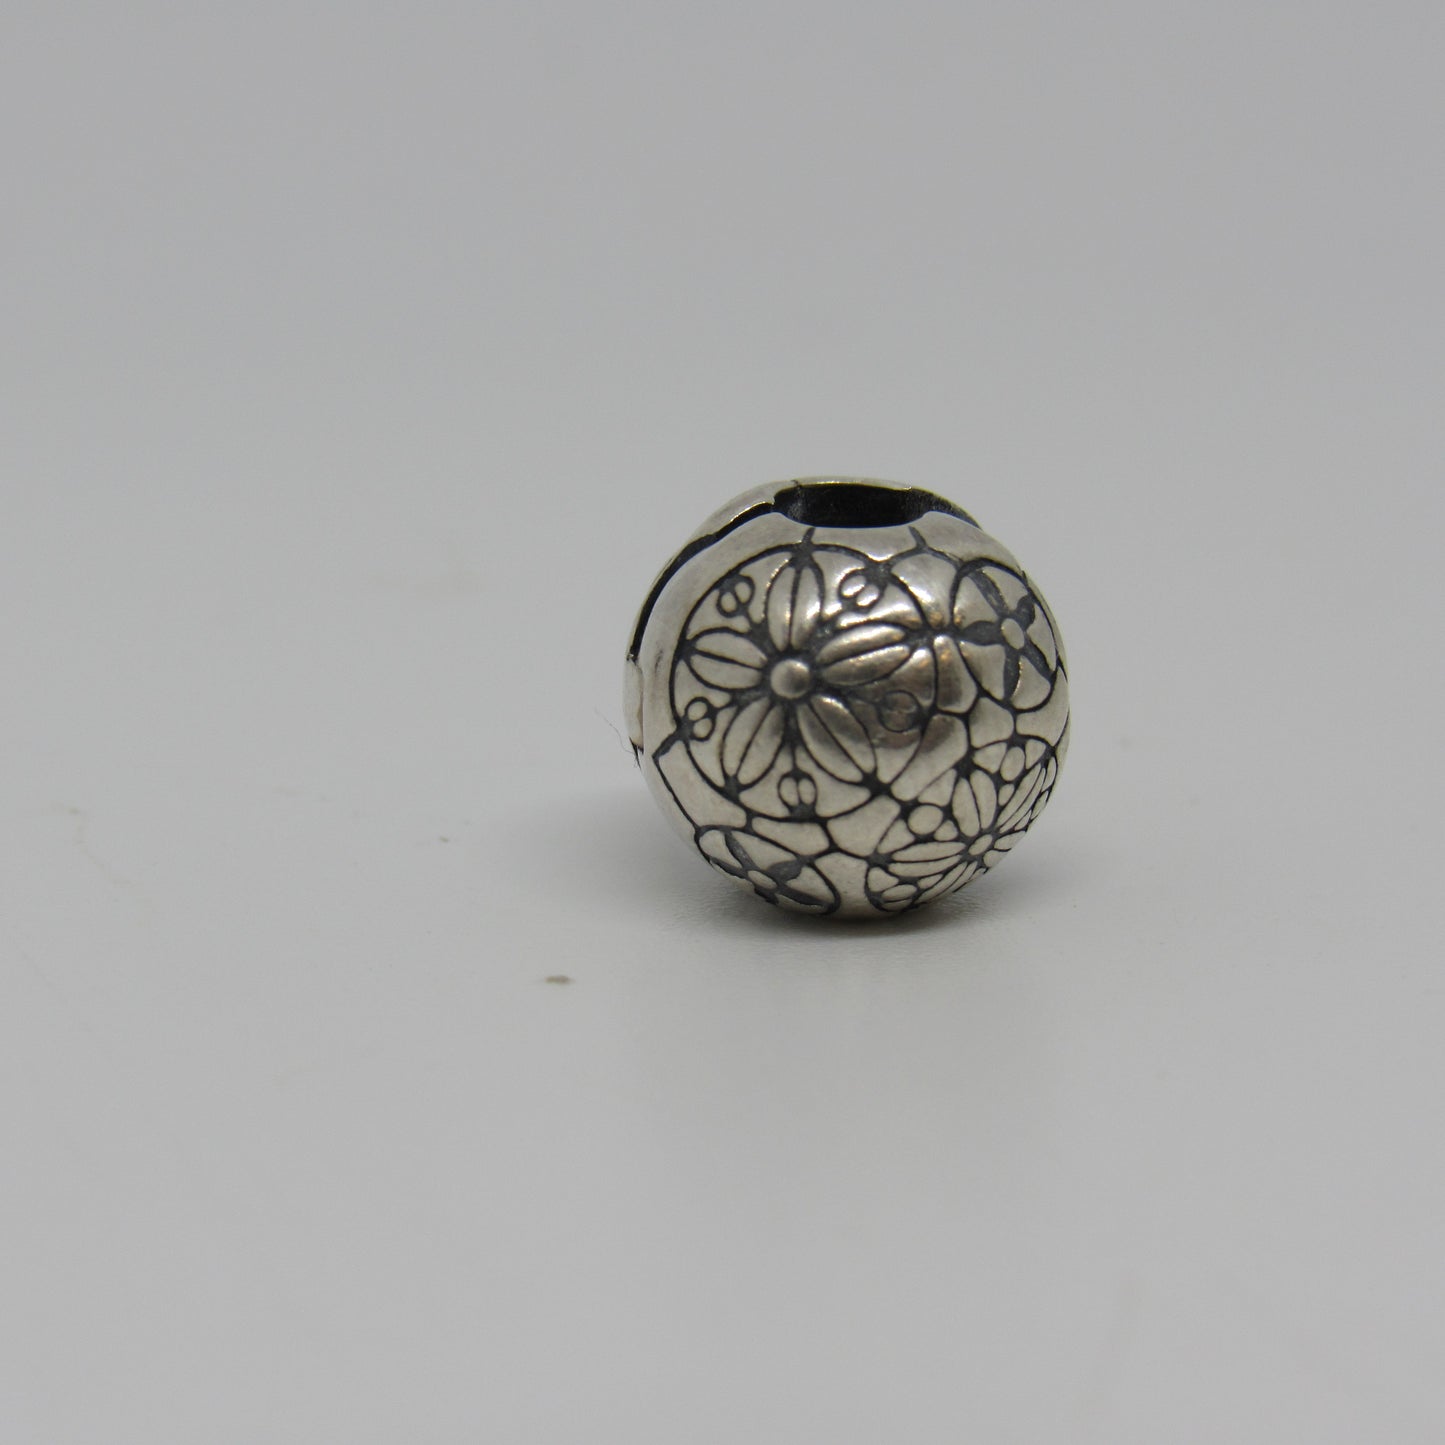 Pandora Sterling Silver Da Vinci Clip Charm Bead - #791010